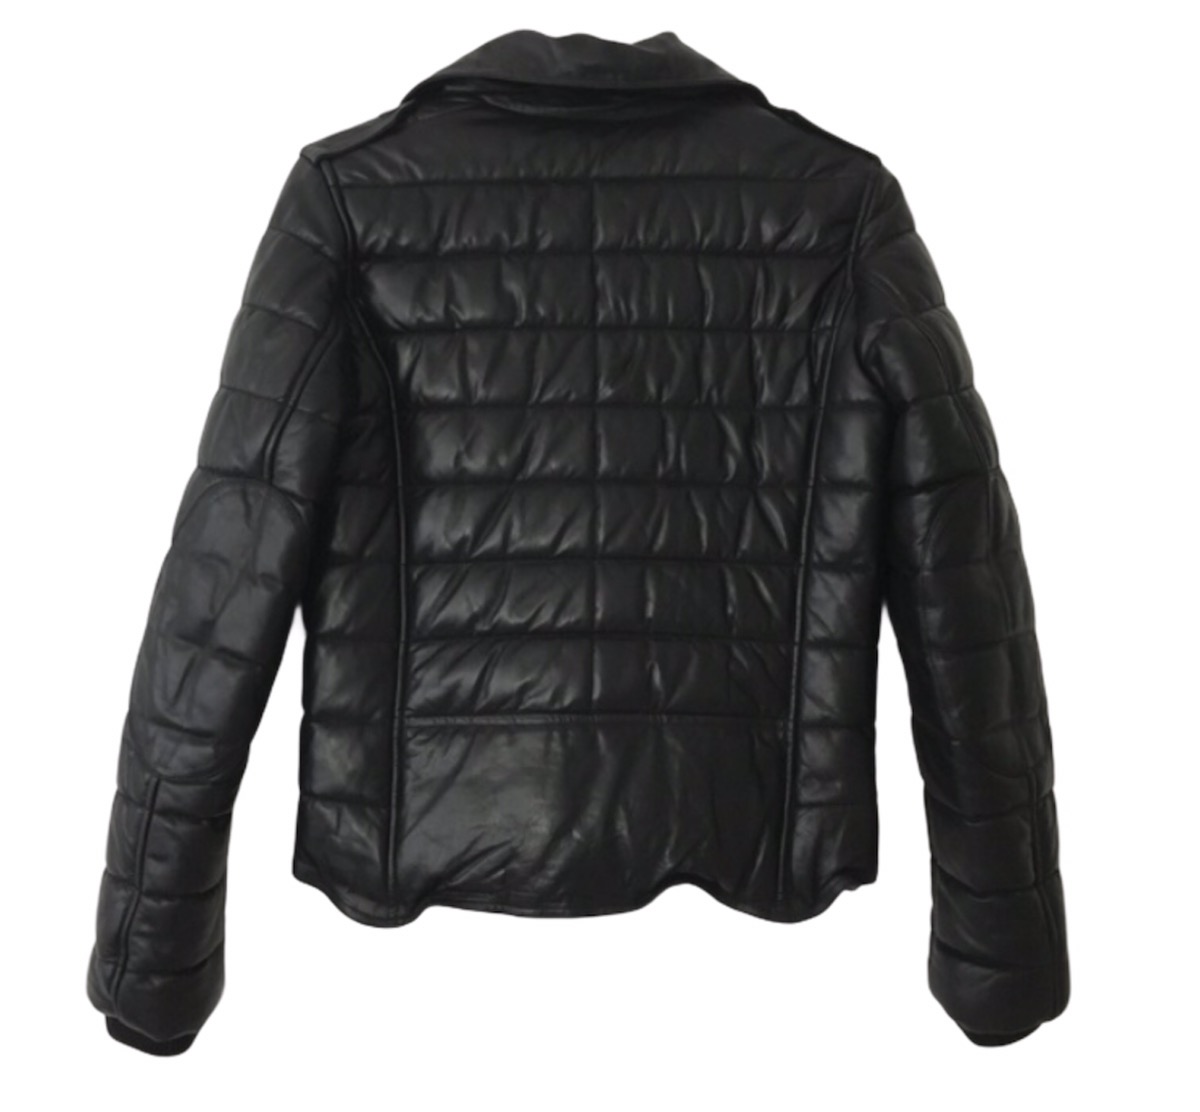 Rare Alexander Wang x H&M Padded Leather Biker Jacket - 5